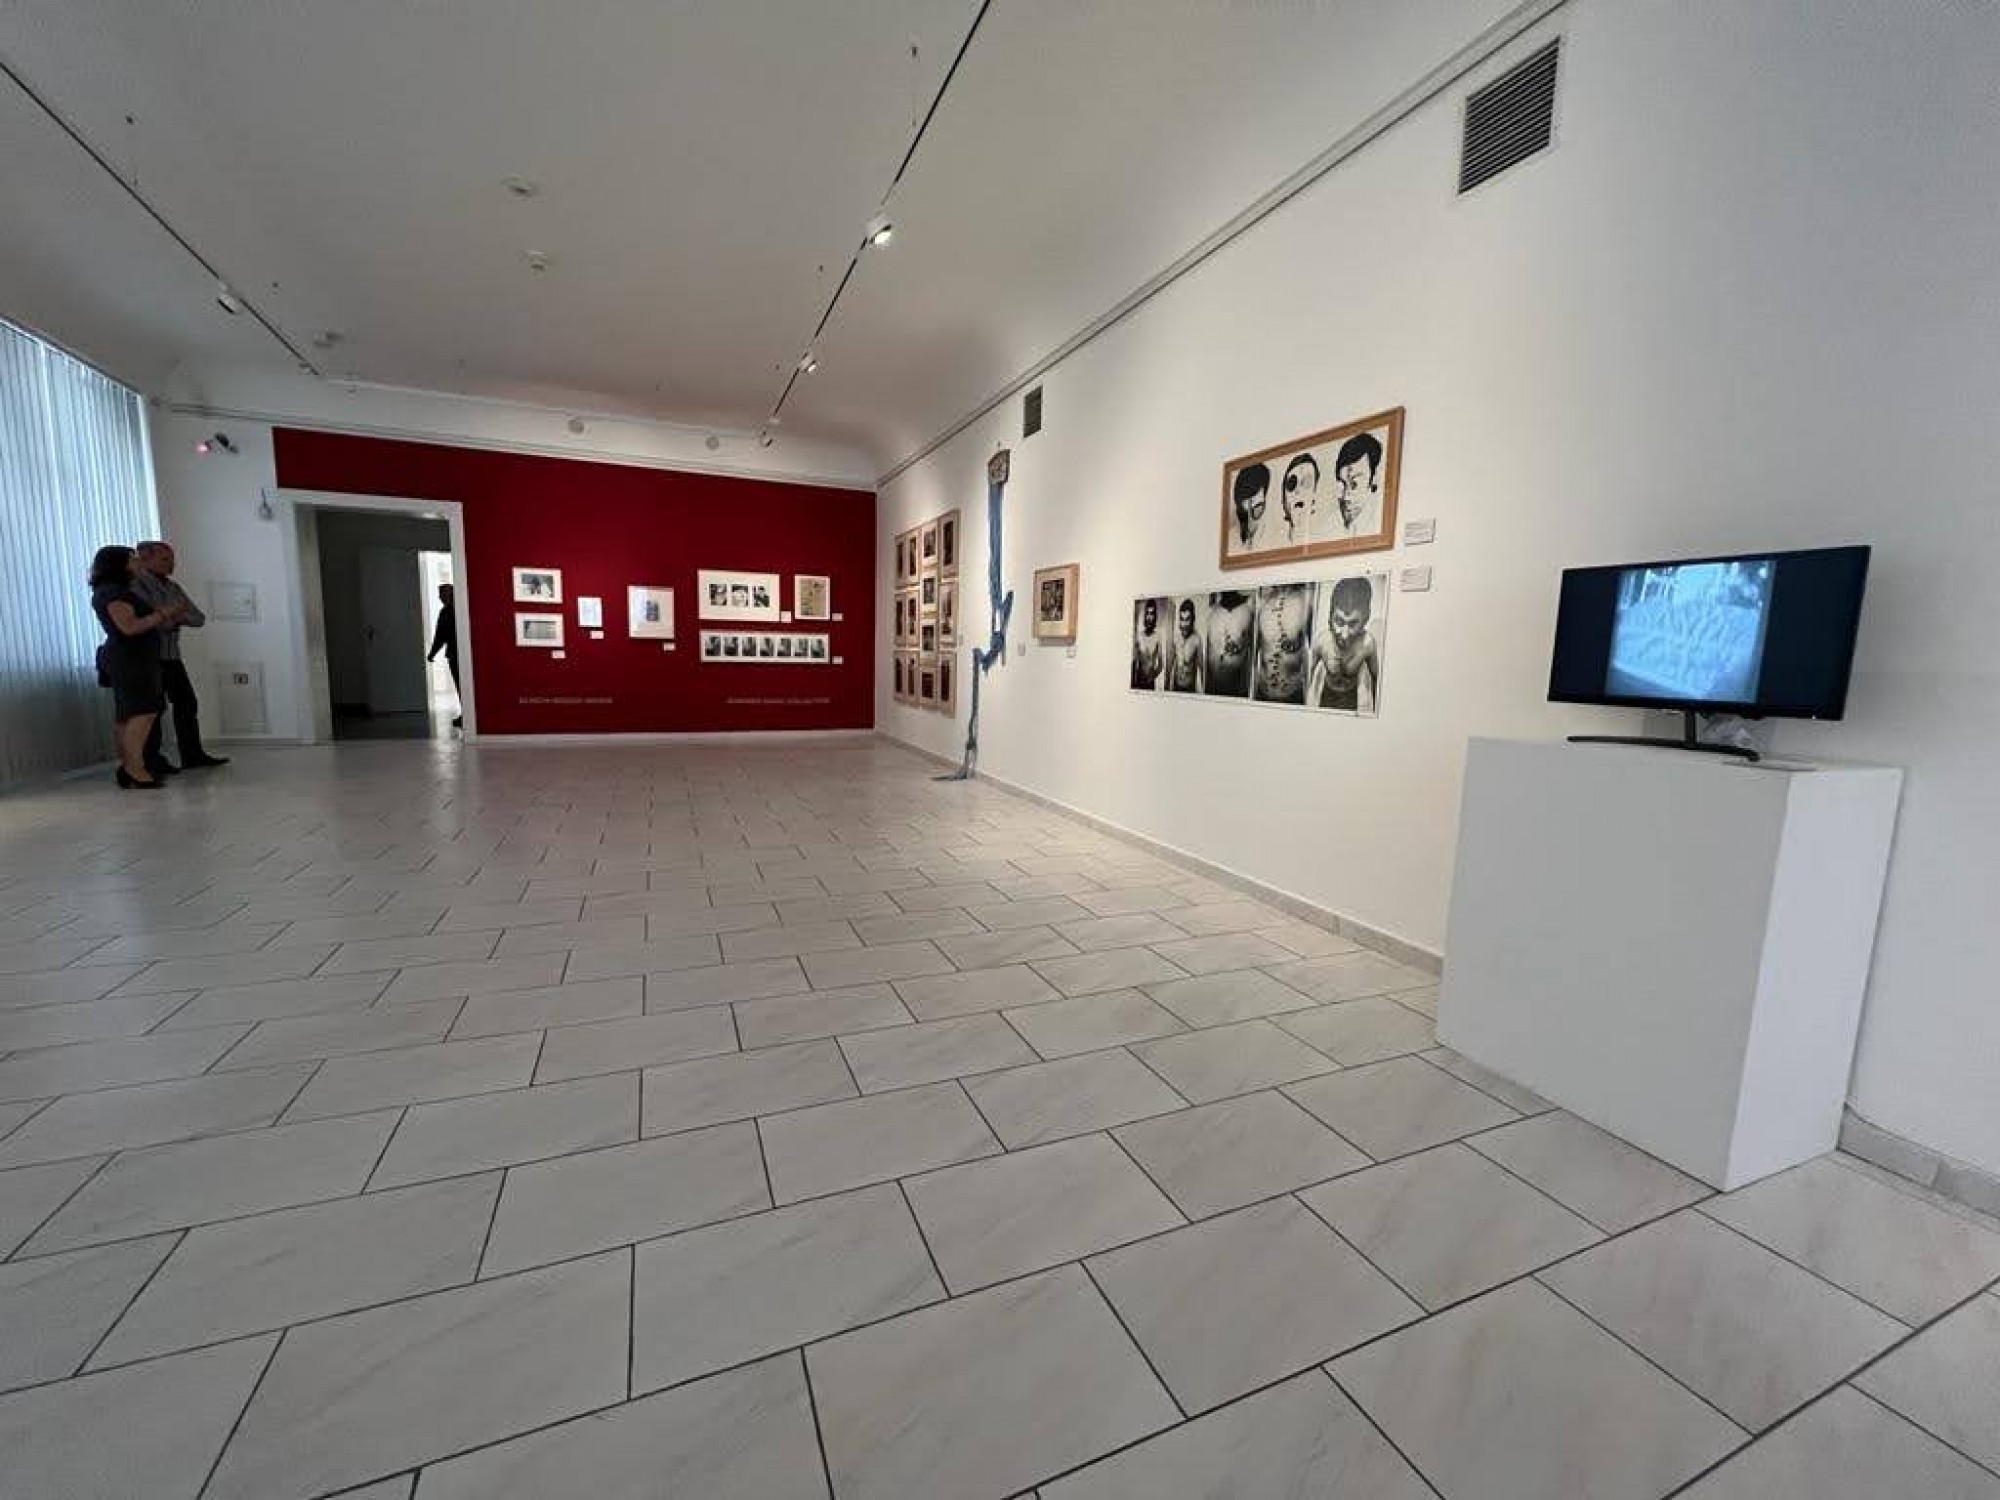 Bosch+Bosch Group. Marinko Sudac Collection. Opening at Olomouc Museum of Art, 2022